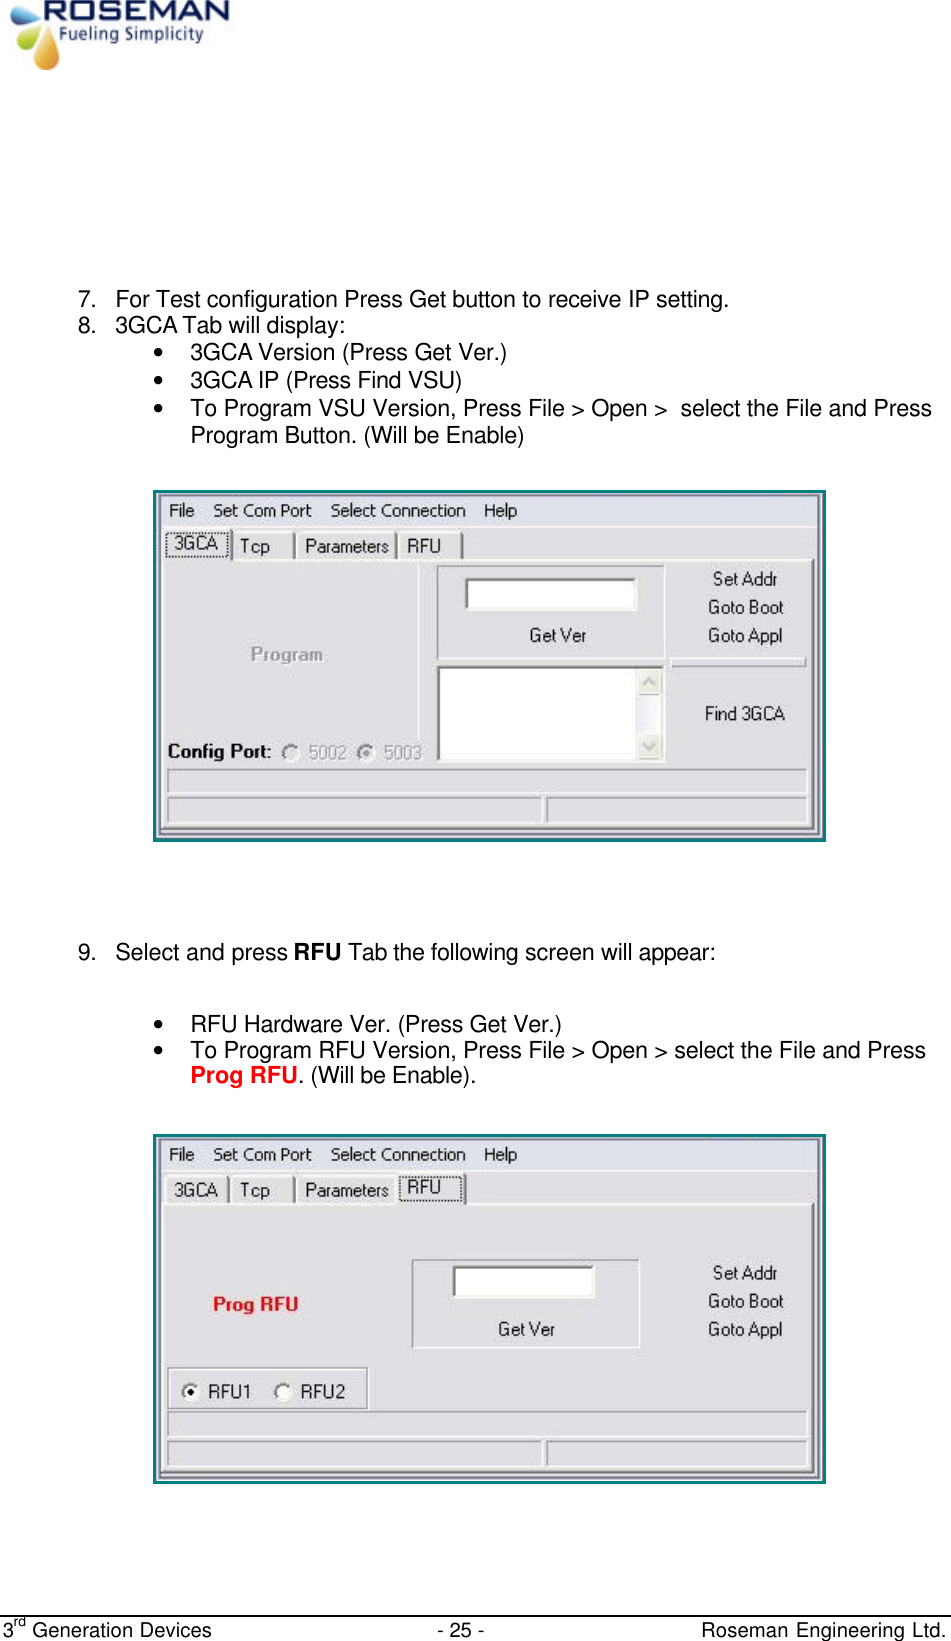  3rd Generation Devices - 25 -   Roseman Engineering Ltd.        7. For Test configuration Press Get button to receive IP setting. 8. 3GCA Tab will display:  • 3GCA Version (Press Get Ver.) • 3GCA IP (Press Find VSU) • To Program VSU Version, Press File &gt; Open &gt;  select the File and Press Program Button. (Will be Enable)       9. Select and press RFU Tab the following screen will appear:   • RFU Hardware Ver. (Press Get Ver.) • To Program RFU Version, Press File &gt; Open &gt; select the File and Press Prog RFU. (Will be Enable).       